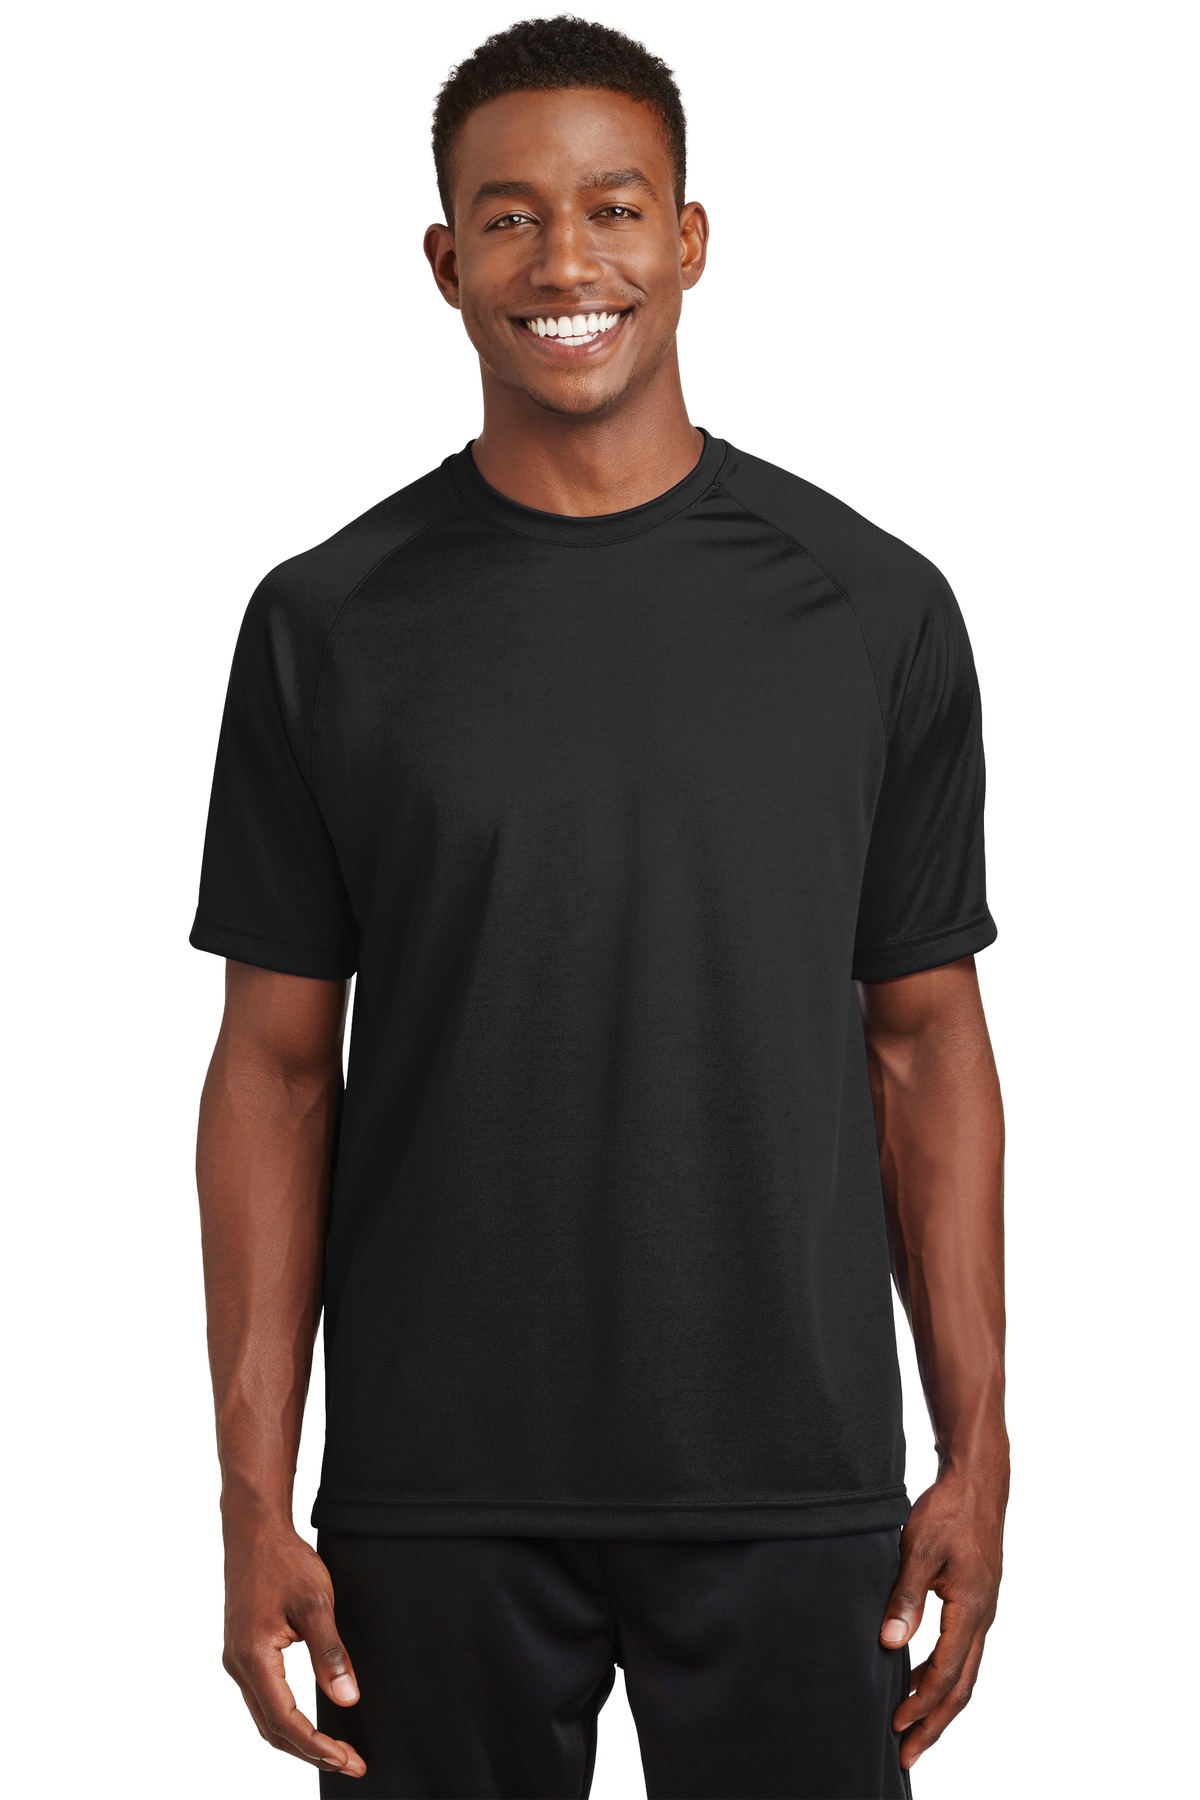 Sport-Tek Corporate Hospitality Activewear & TShirts ® Dry Zone® Short Sleeve Raglan T-Shirt.-Sport-Tek